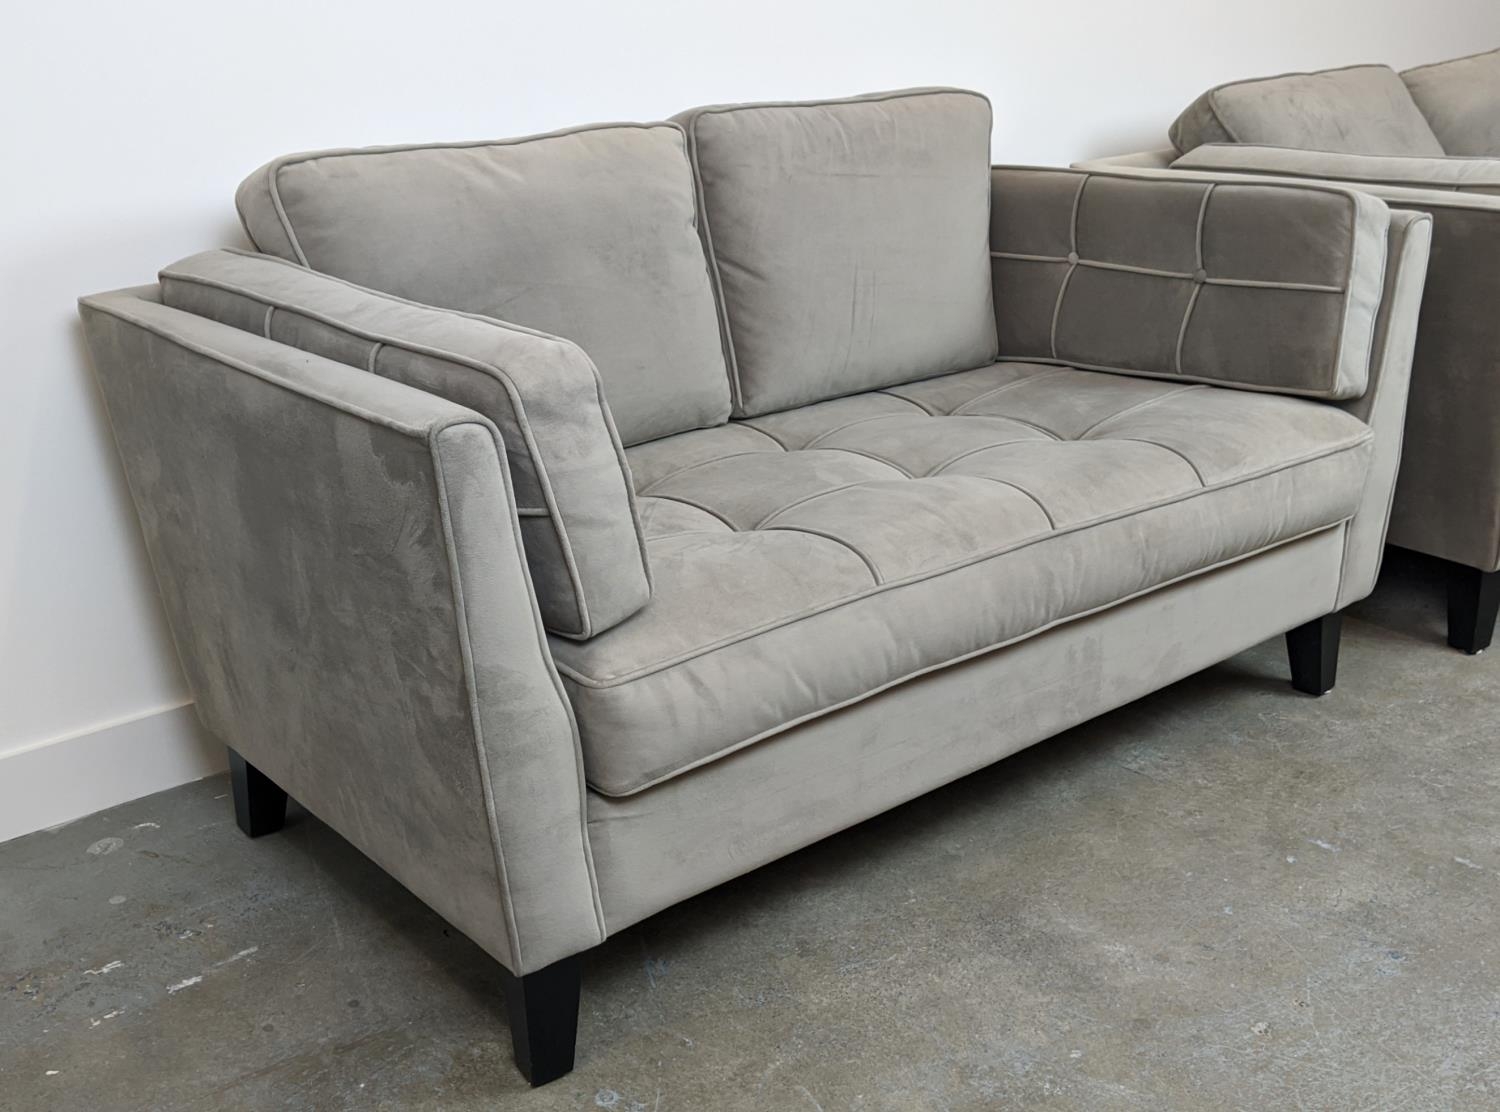 SOFA, 1960s Danish inspired, grey upholstery, 158cm W. - Image 2 of 7